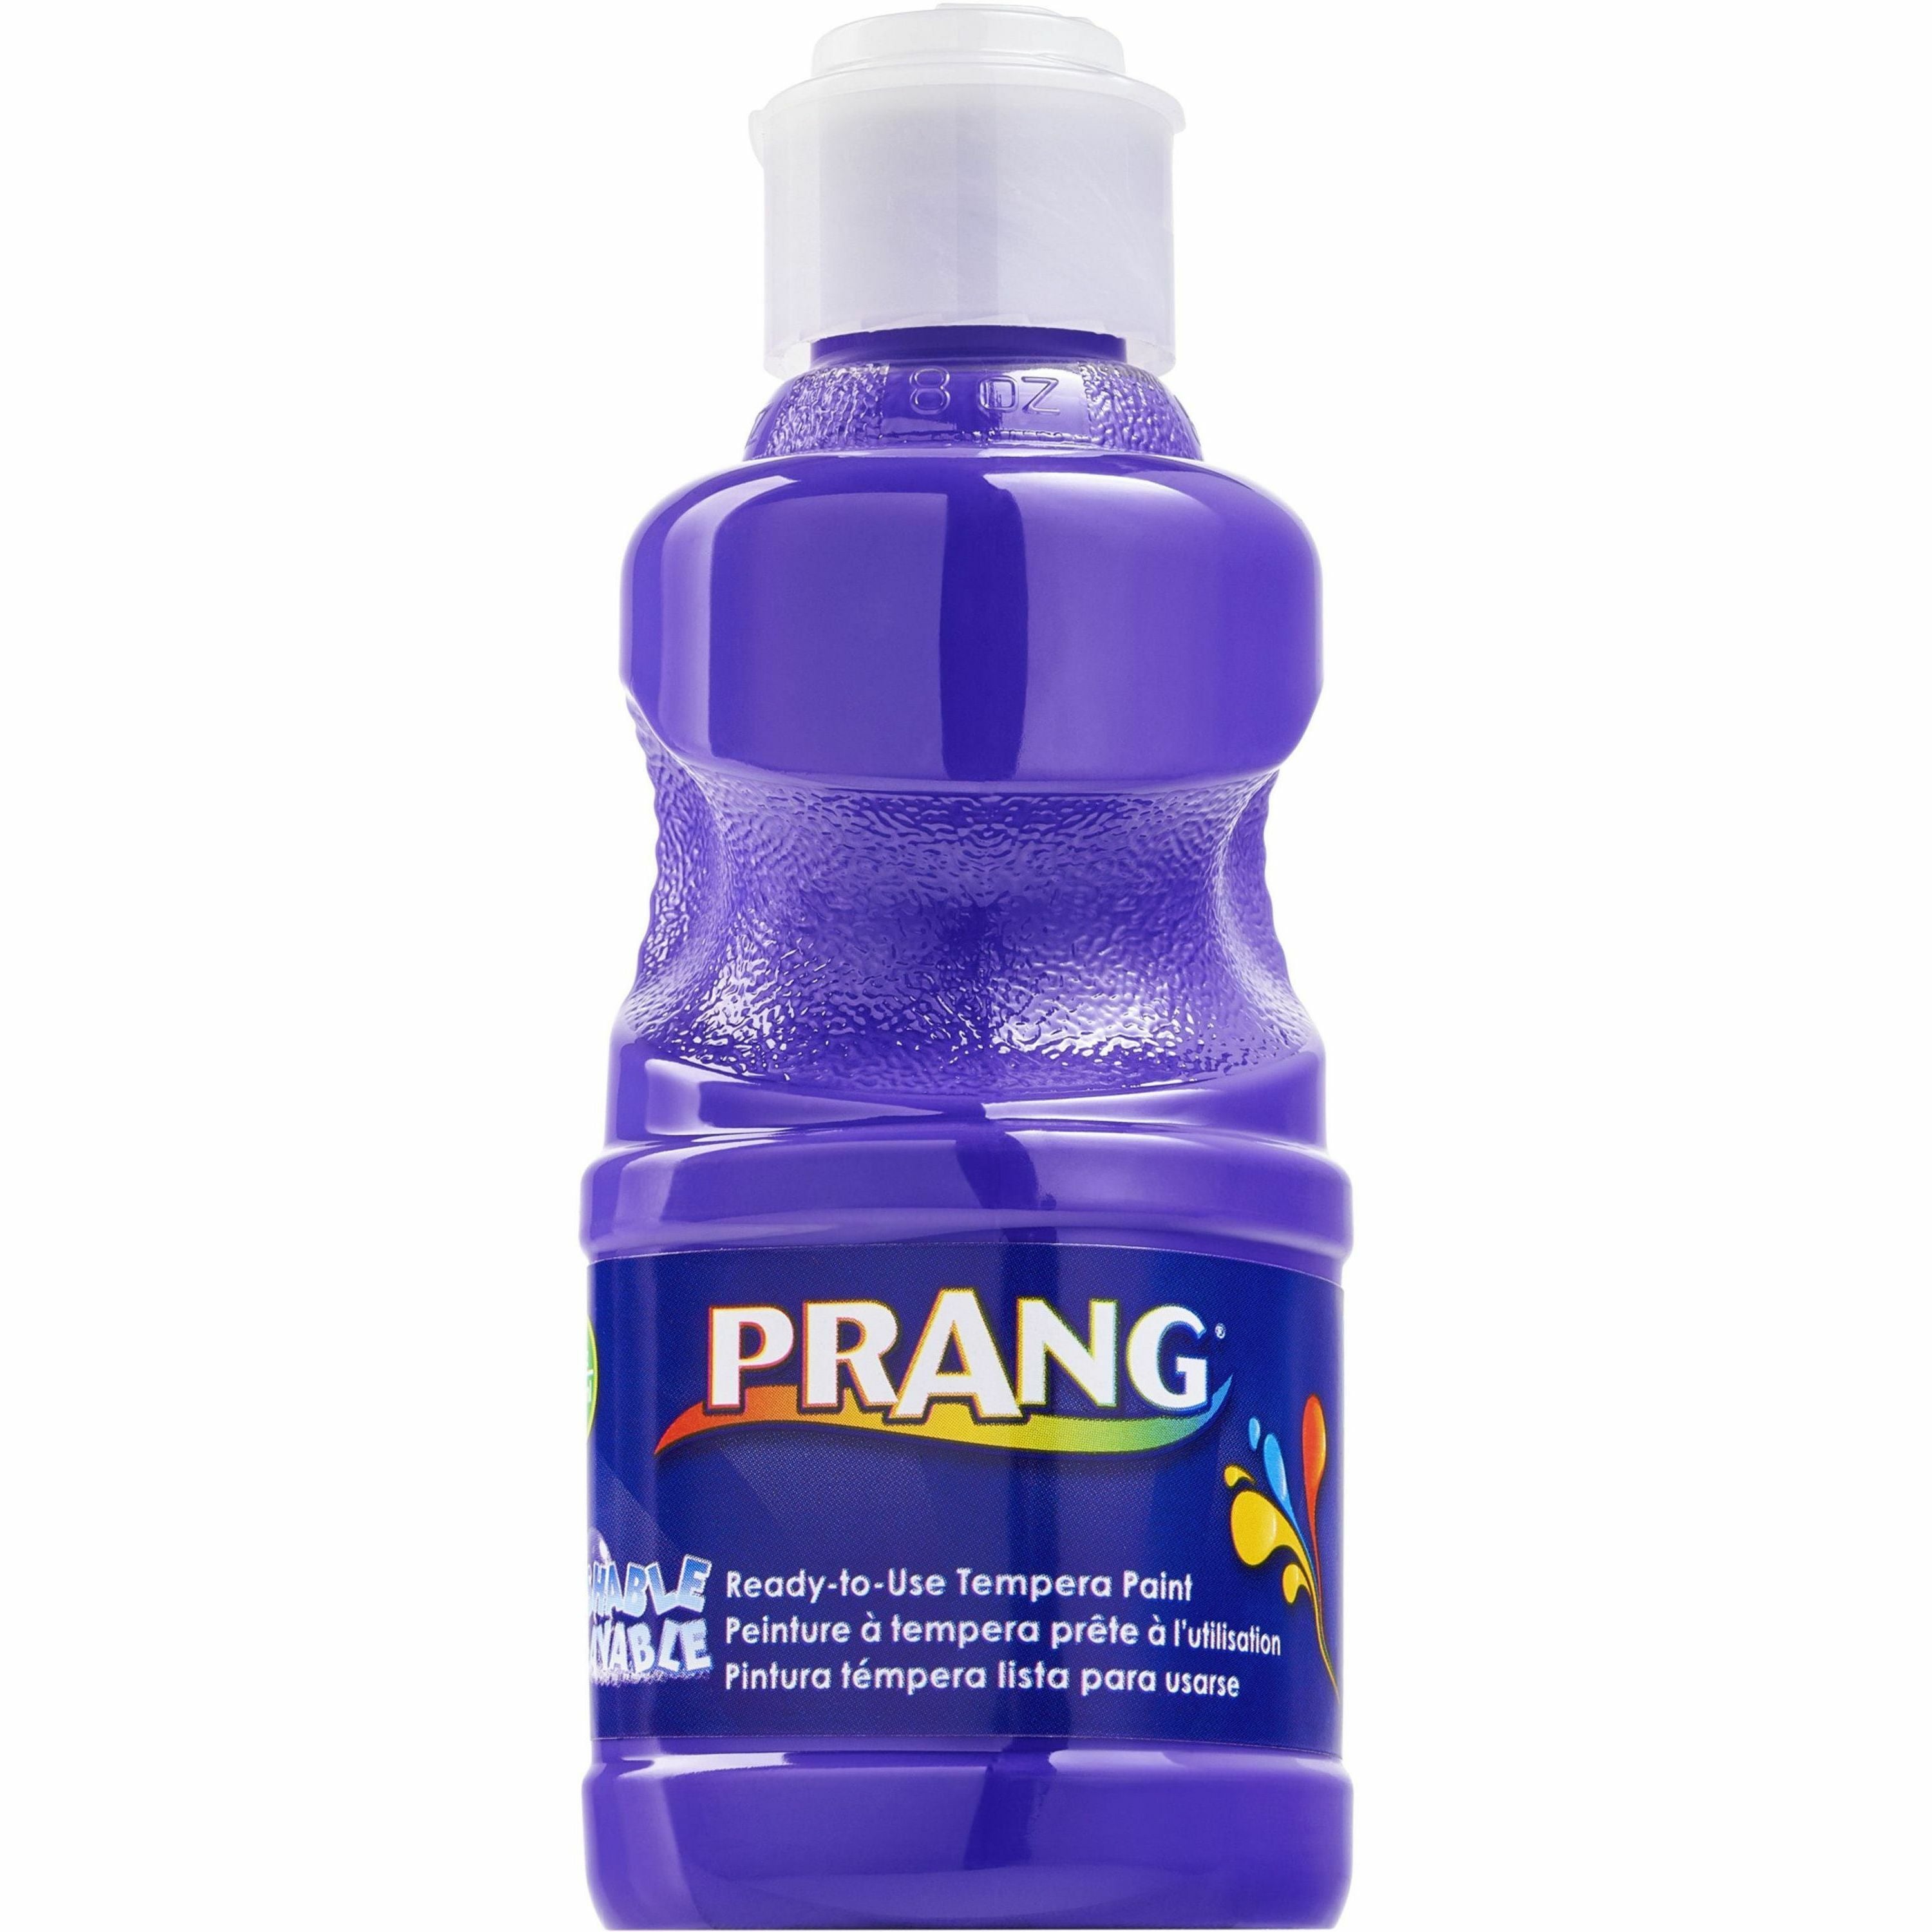 prang-ready-to-use-washable-tempera-paint-8-fl-oz-1-each-violet_dixx10806 - 1